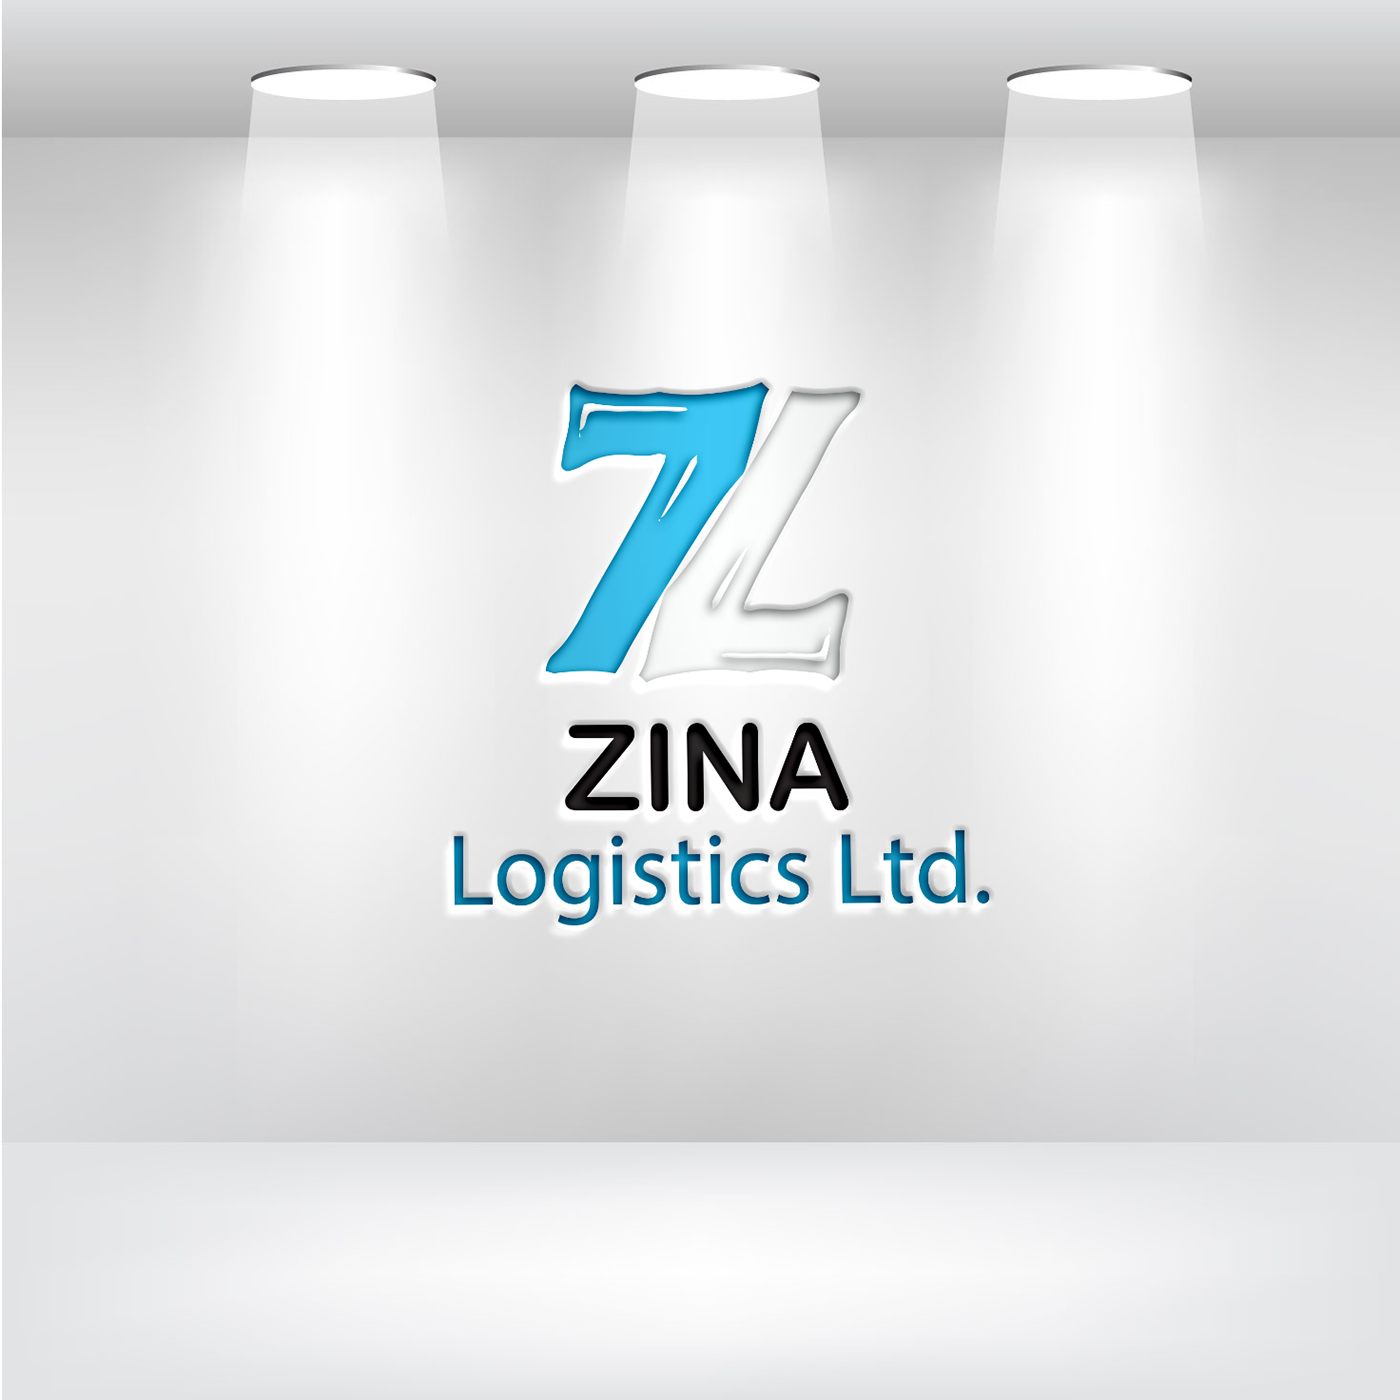 logo Logo Design Zina Logistics Ltd taypography logo Advertising  art artwork graphic design  brand identity adobe illustrator